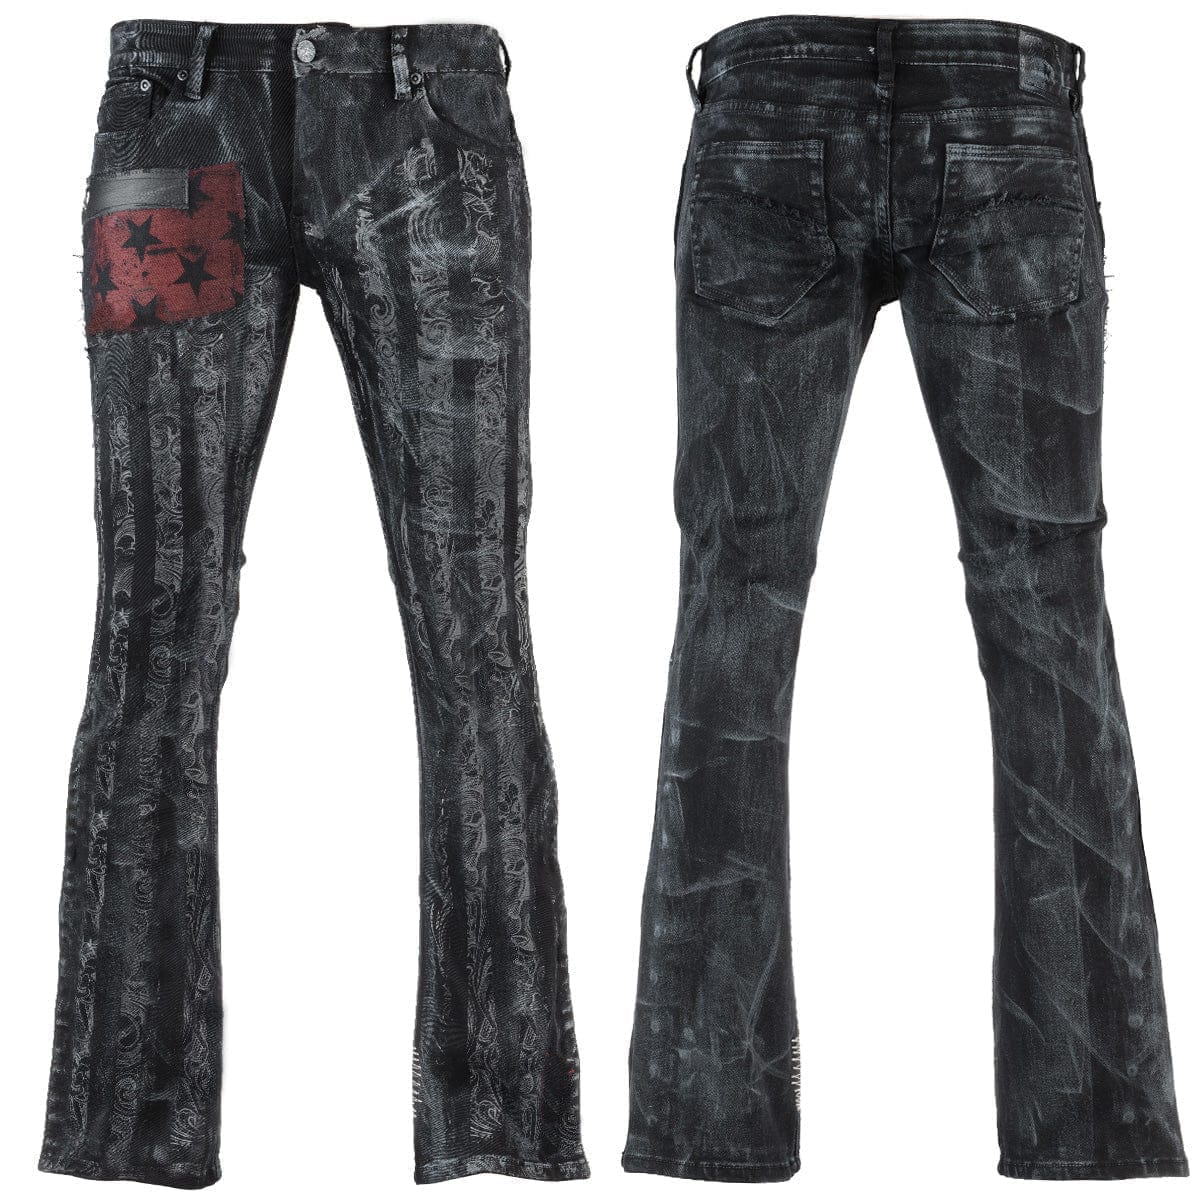 Custom Chop Shop Pants Wornstar Custom - Jeans - Dream On